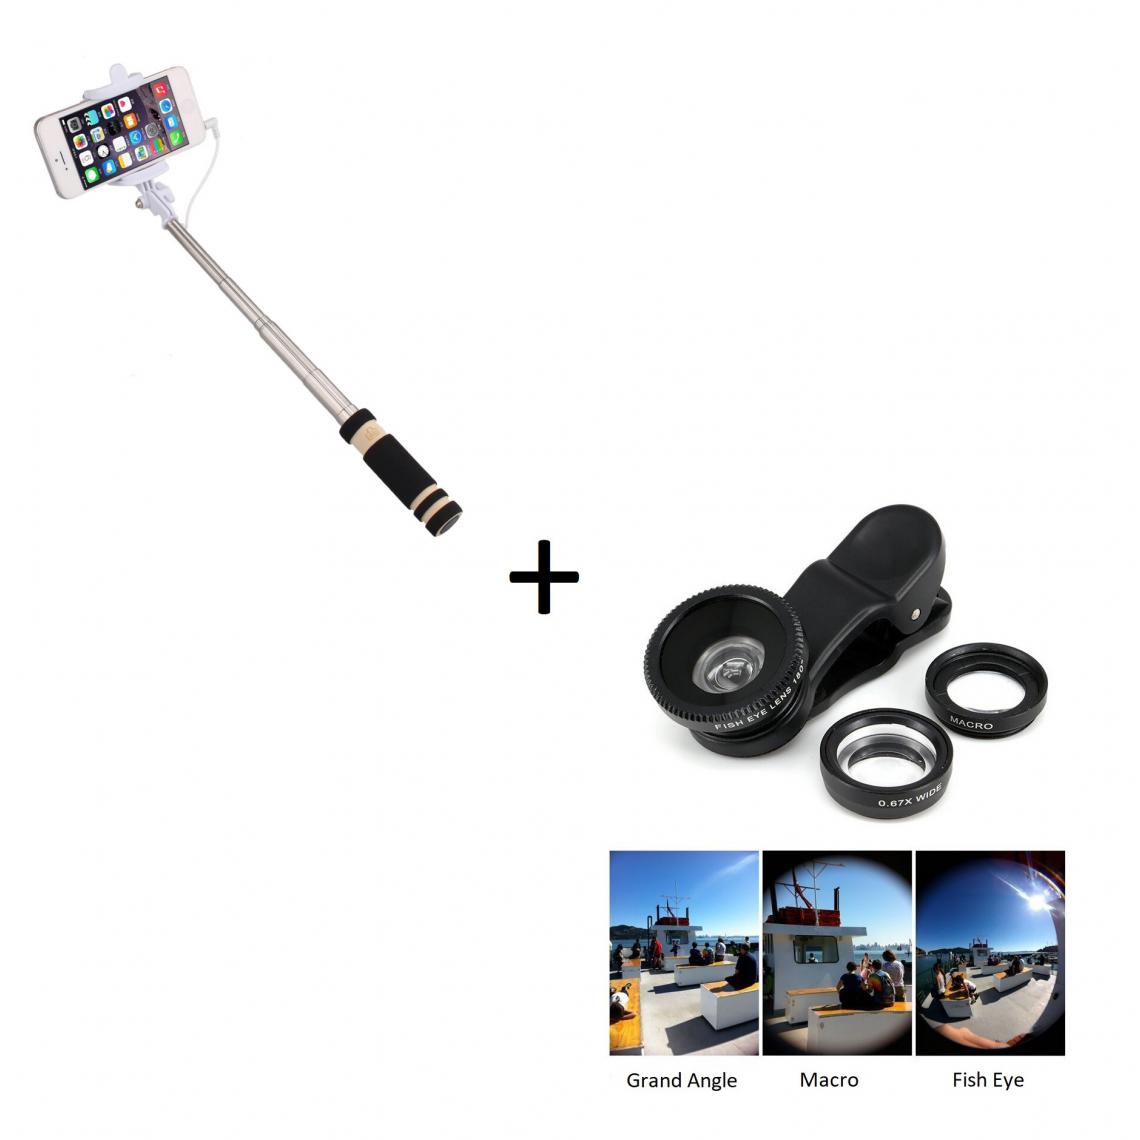 Shot - Pack Photo pour "OPPO Find X2 Lite" Smartphone (Mini Selfie Stick + Objectif Pince 3 en 1) Android IOS Bouton - Autres accessoires smartphone